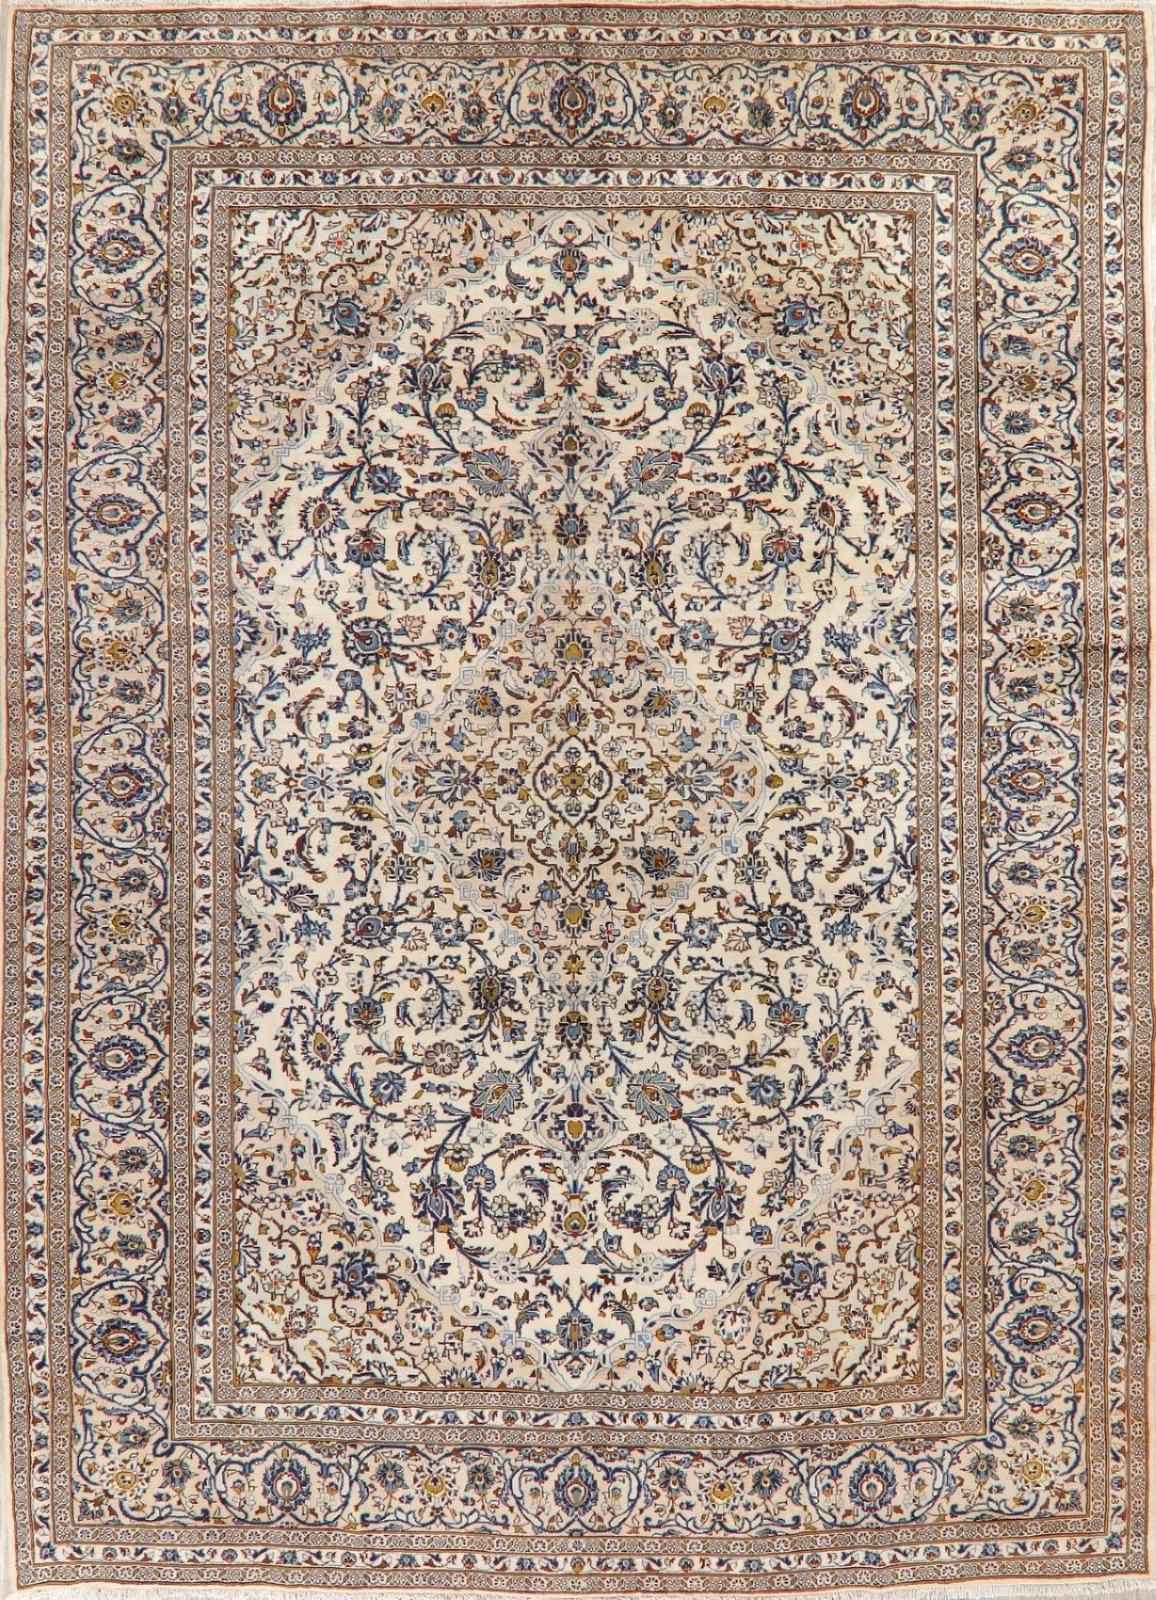 10x12 area rugs walmart